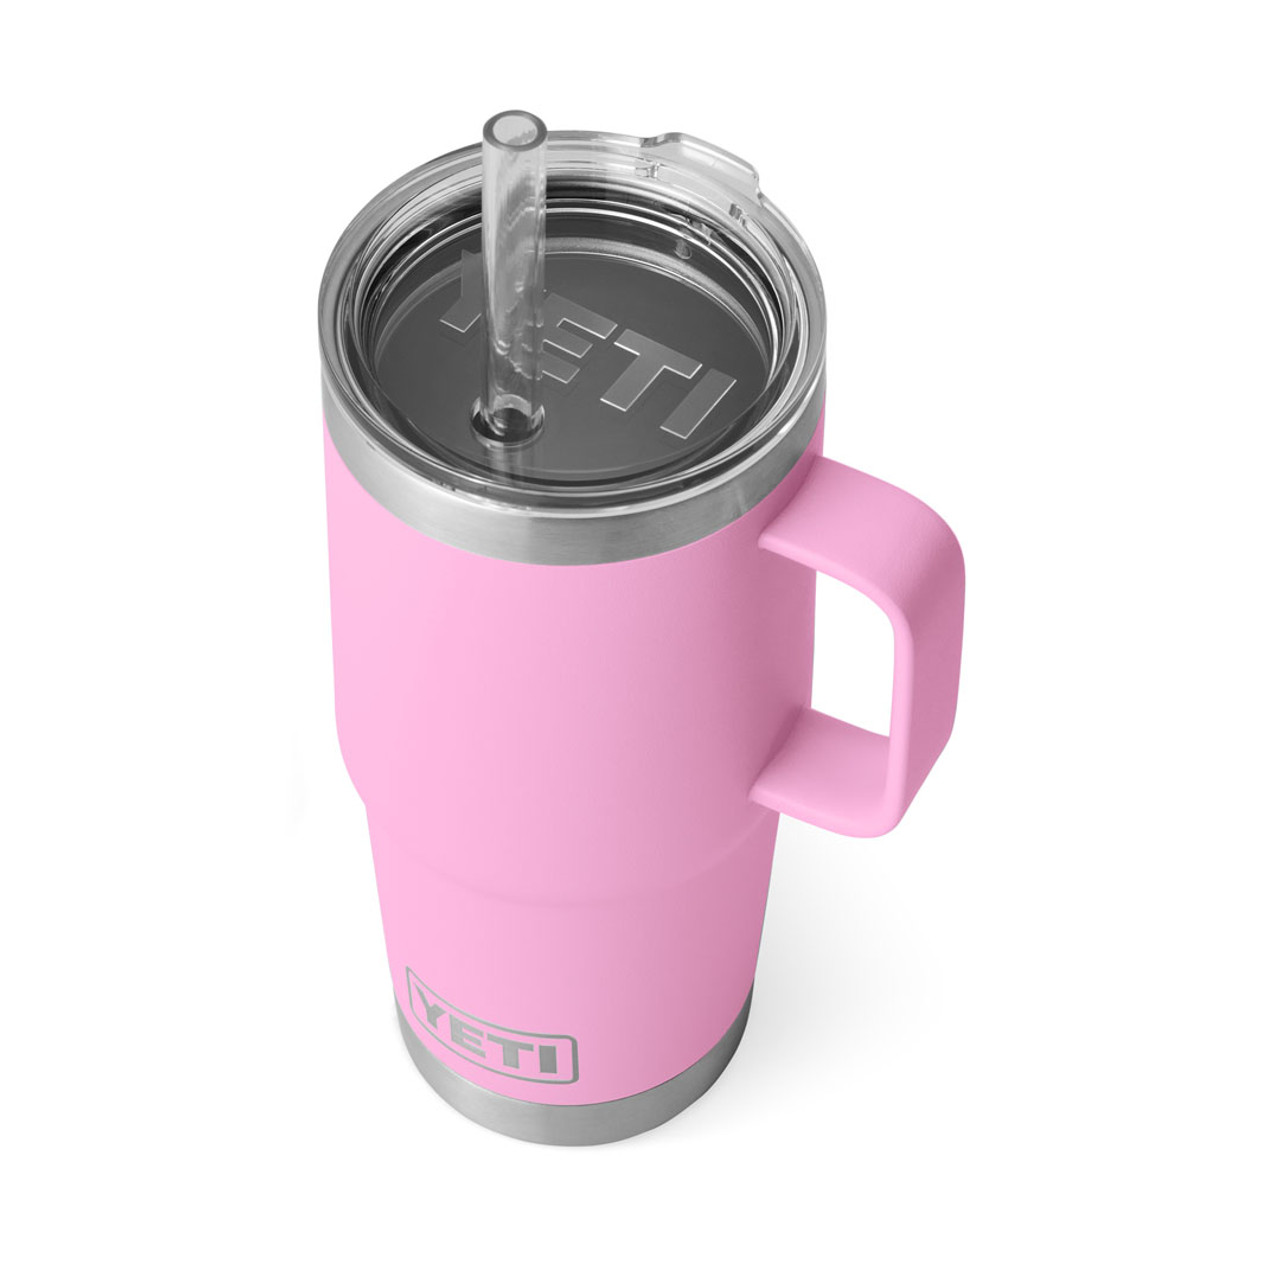 YETI Rambler 25 oz Mug with Straw Lid - Power Pink